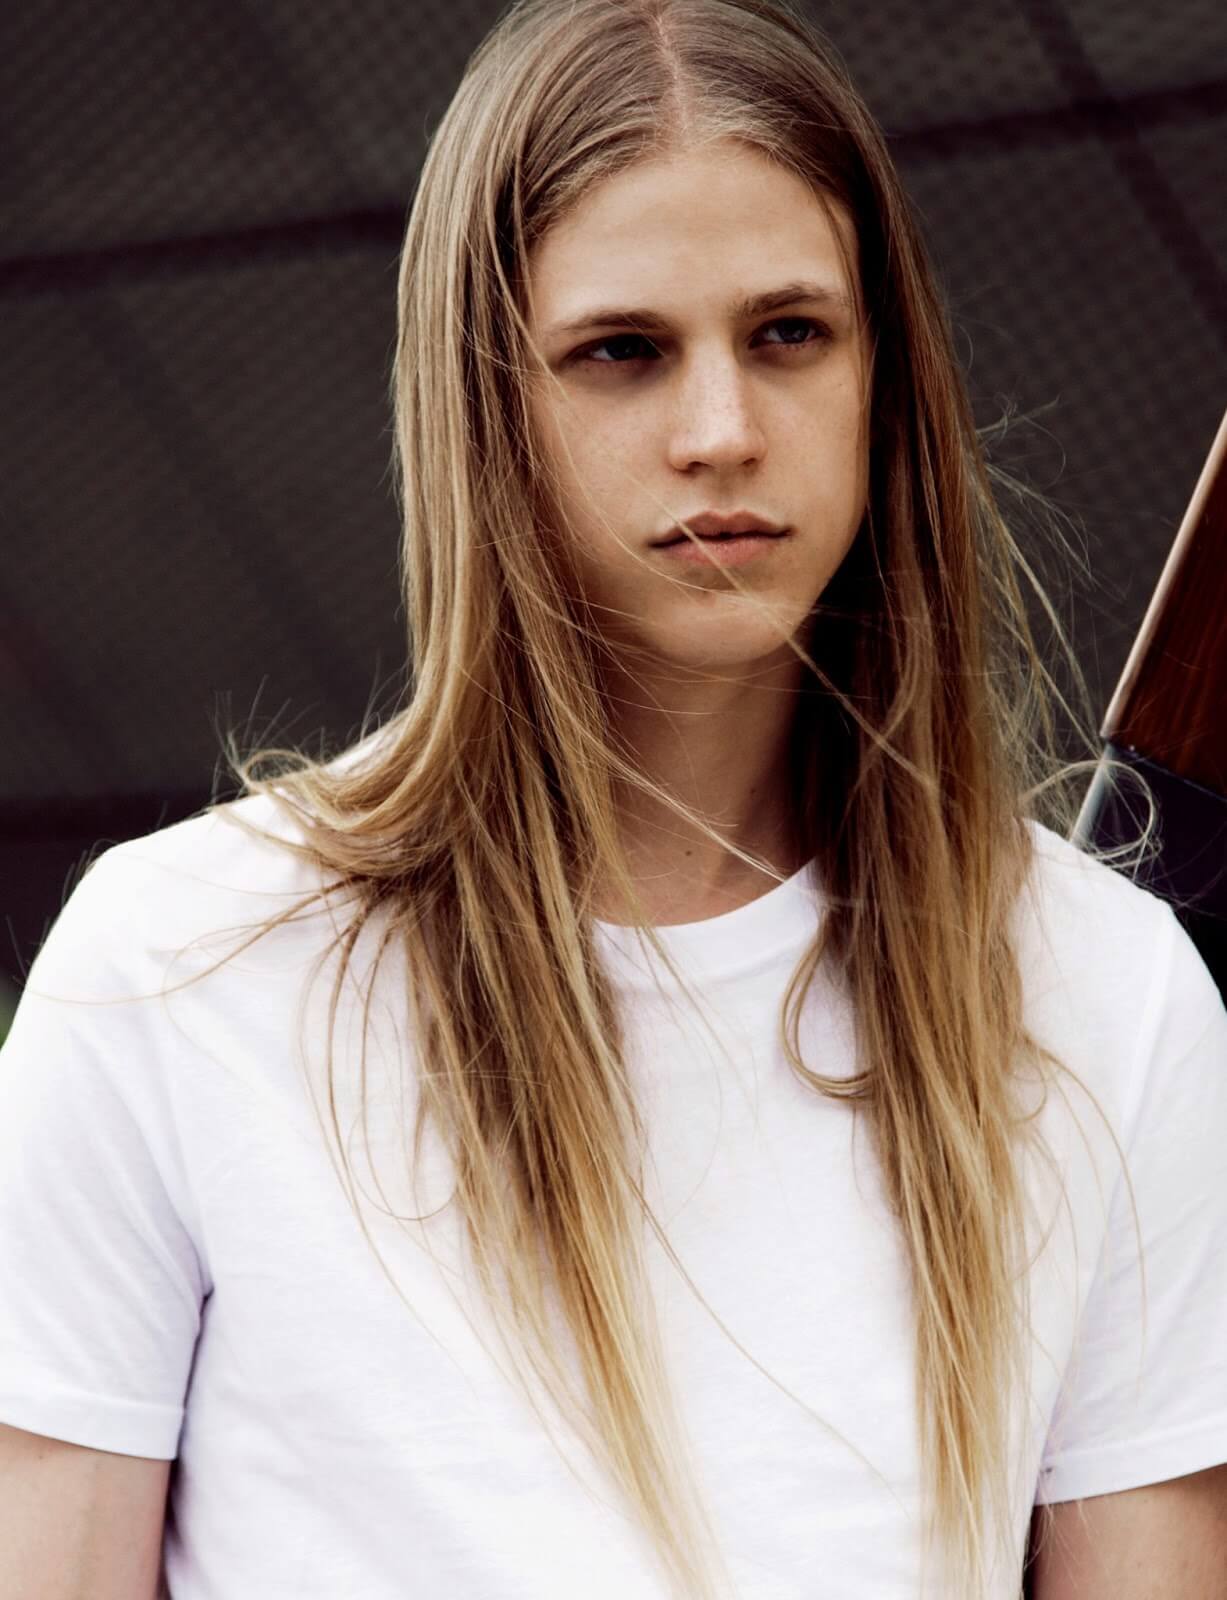 10 Long Hair Male Models